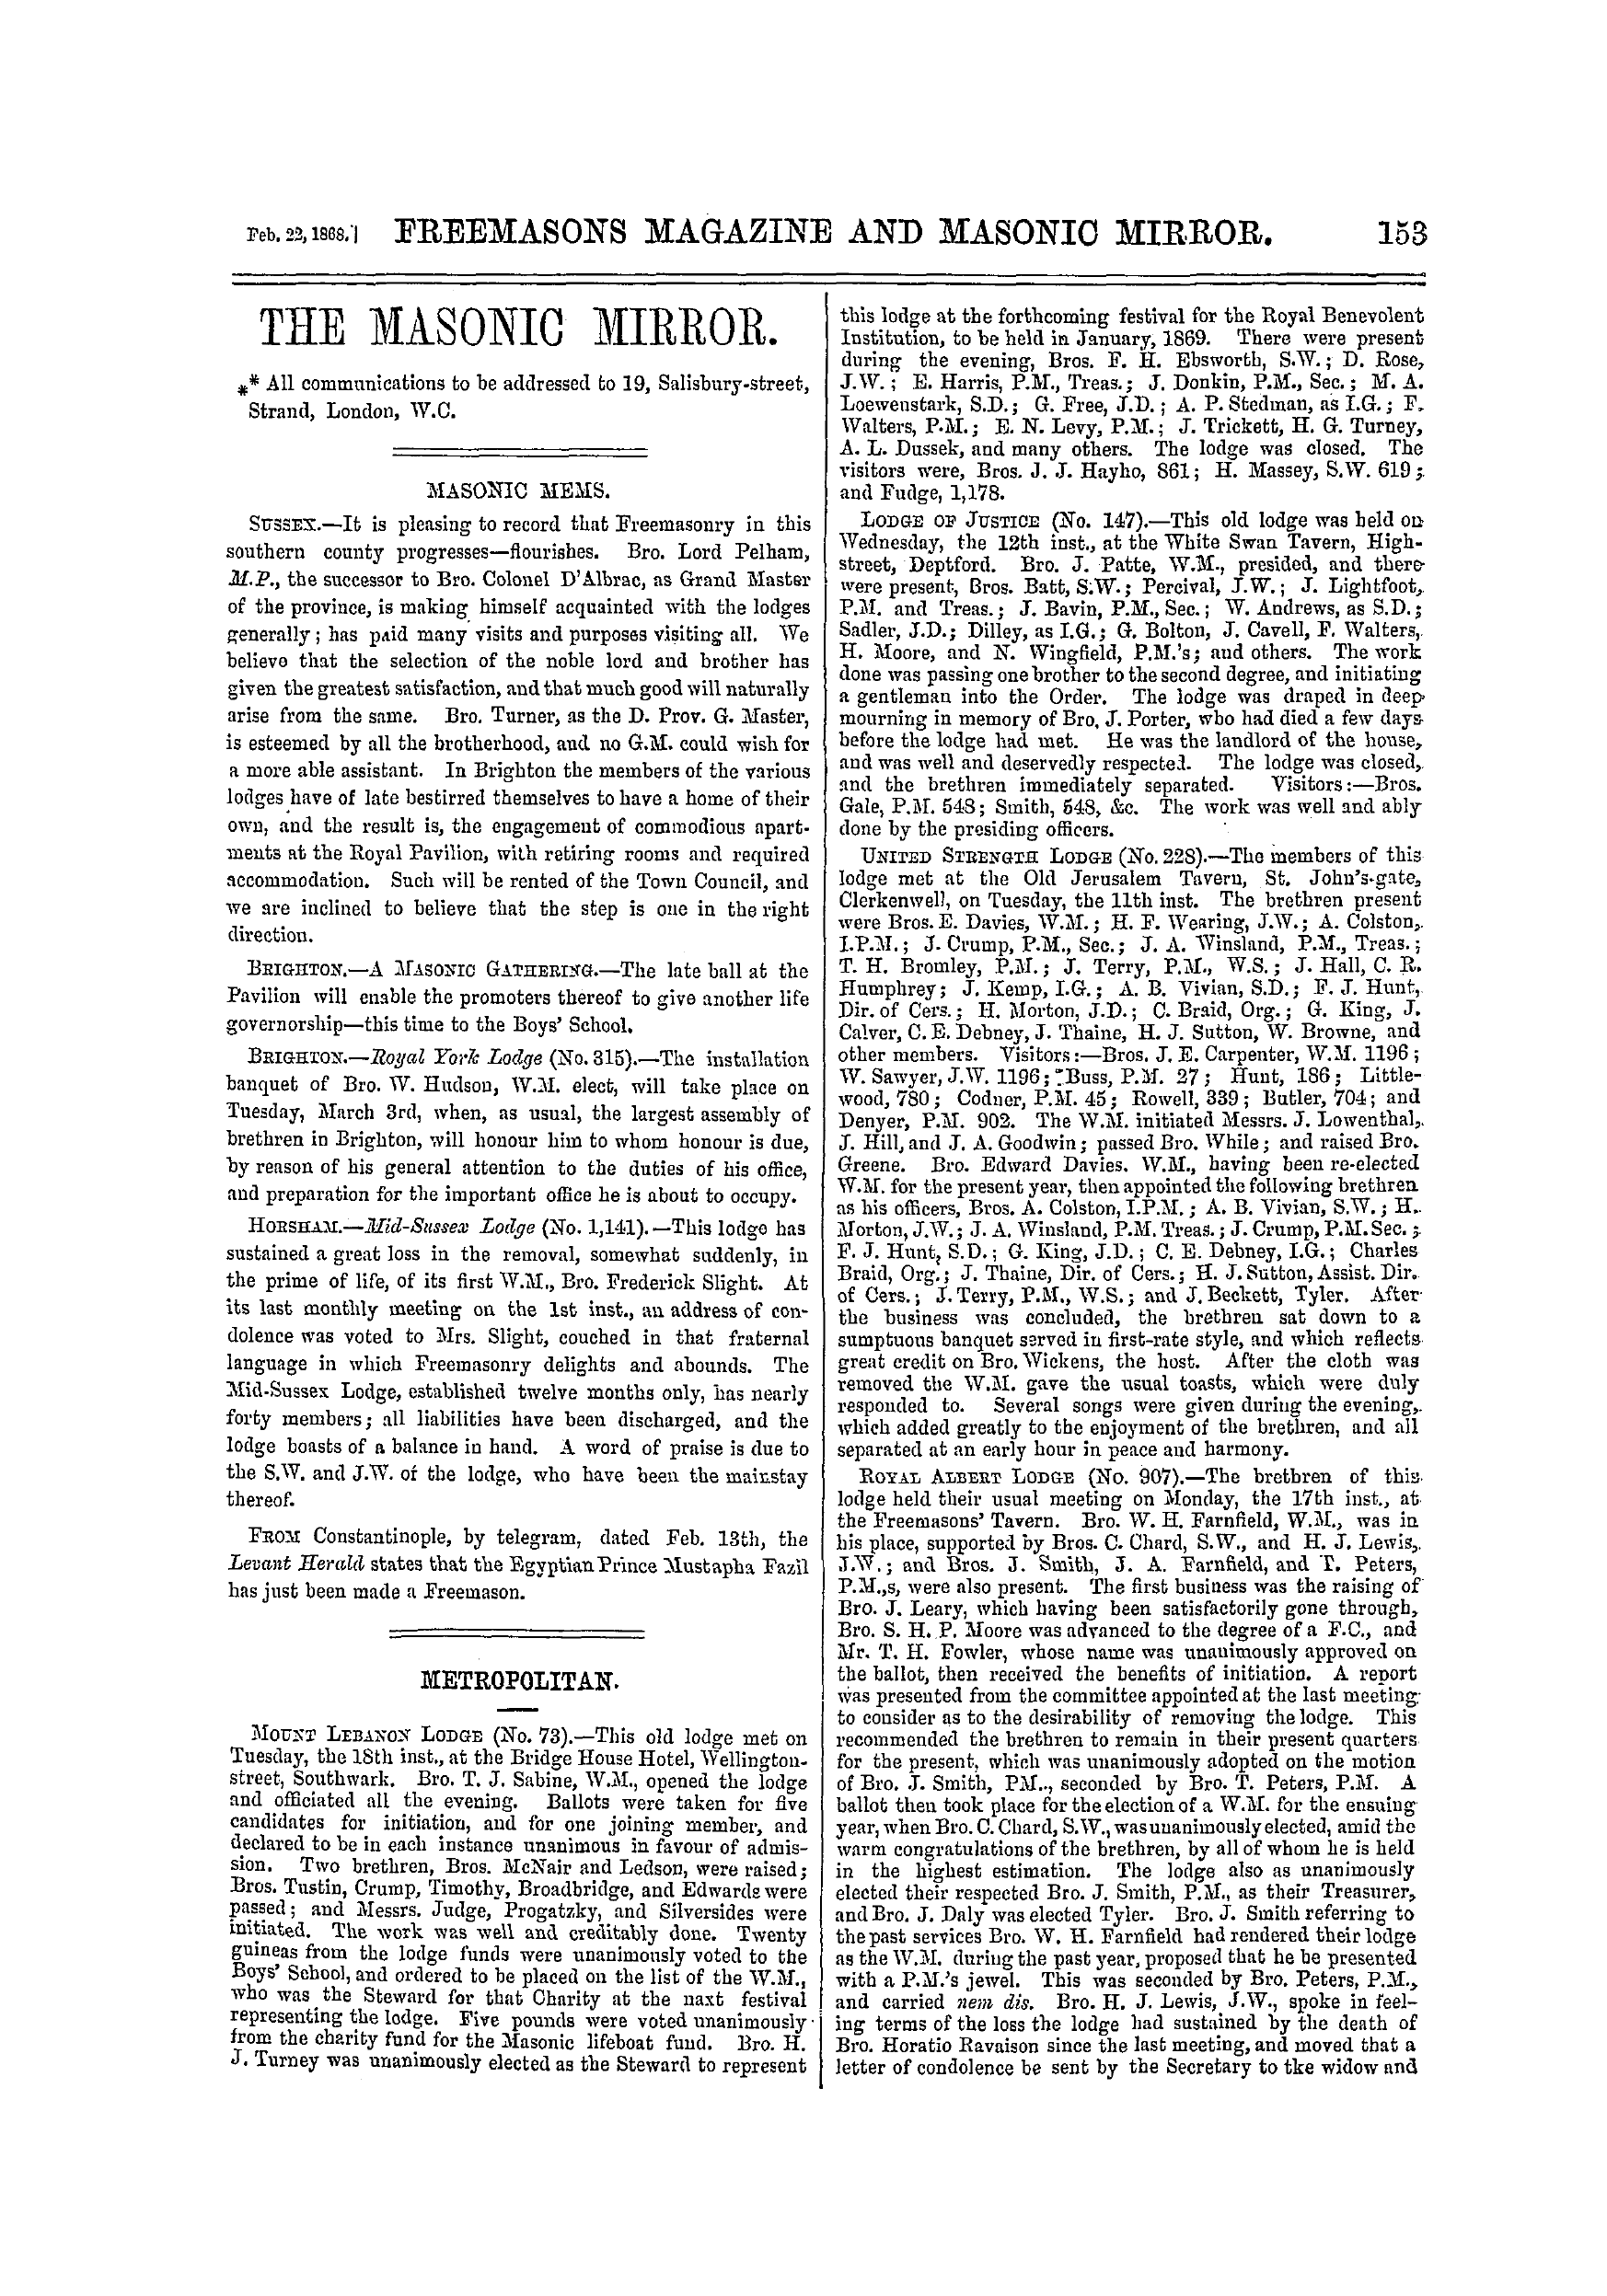 The Freemasons' Monthly Magazine: 1868-02-22 - Metropolitan.